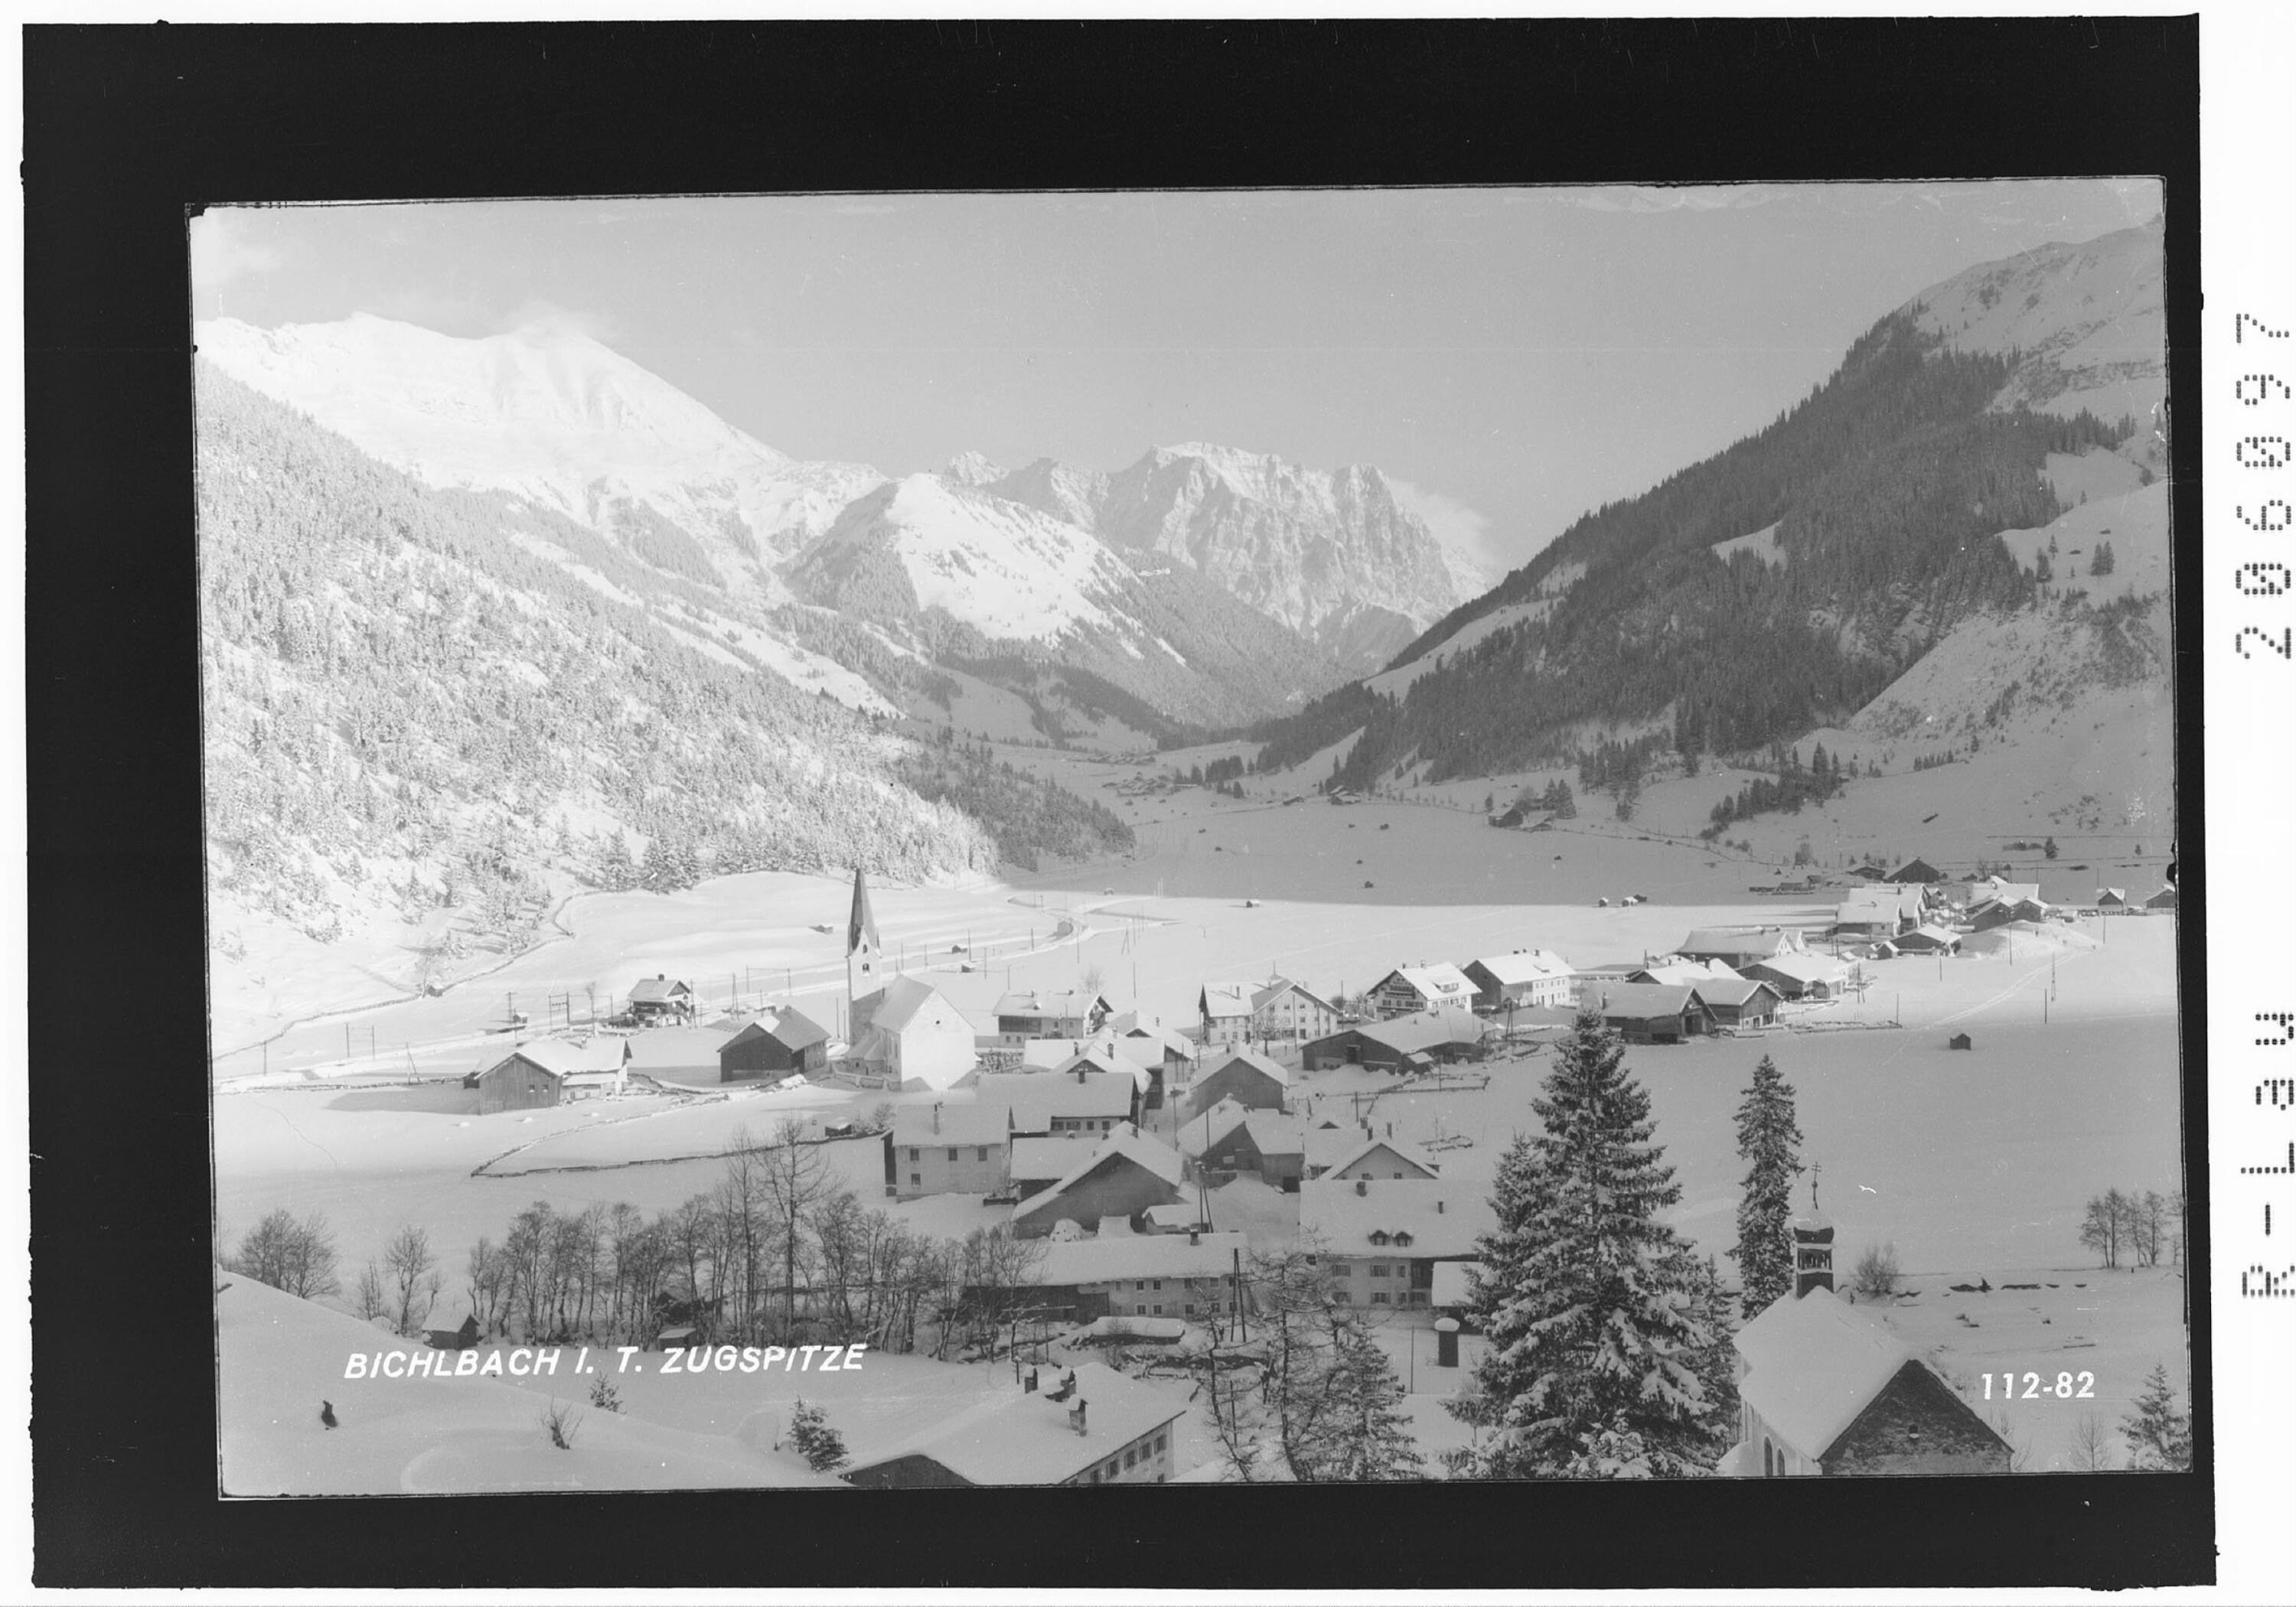 Bichlbach in Tirol Zugspitze></div>


    <hr>
    <div class=